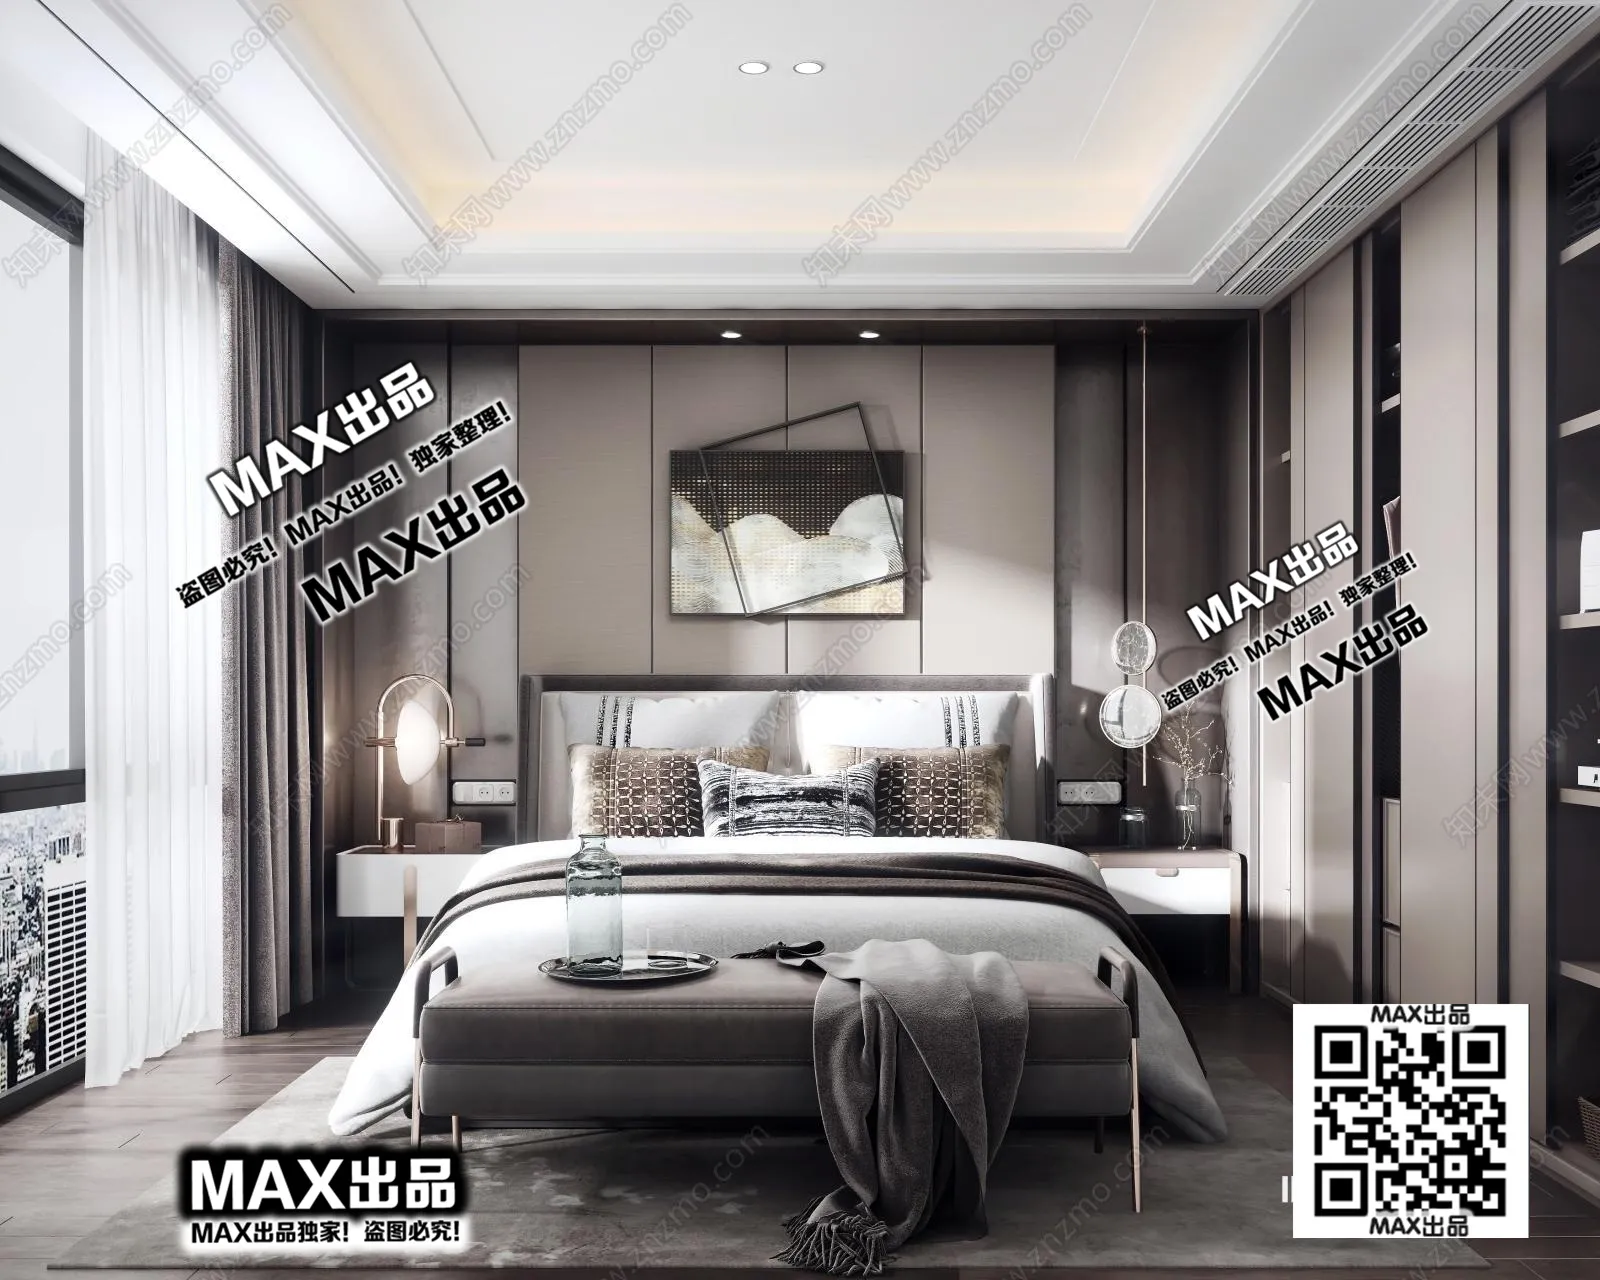 3DS MAX SCENES – LIVING ROOM – 042